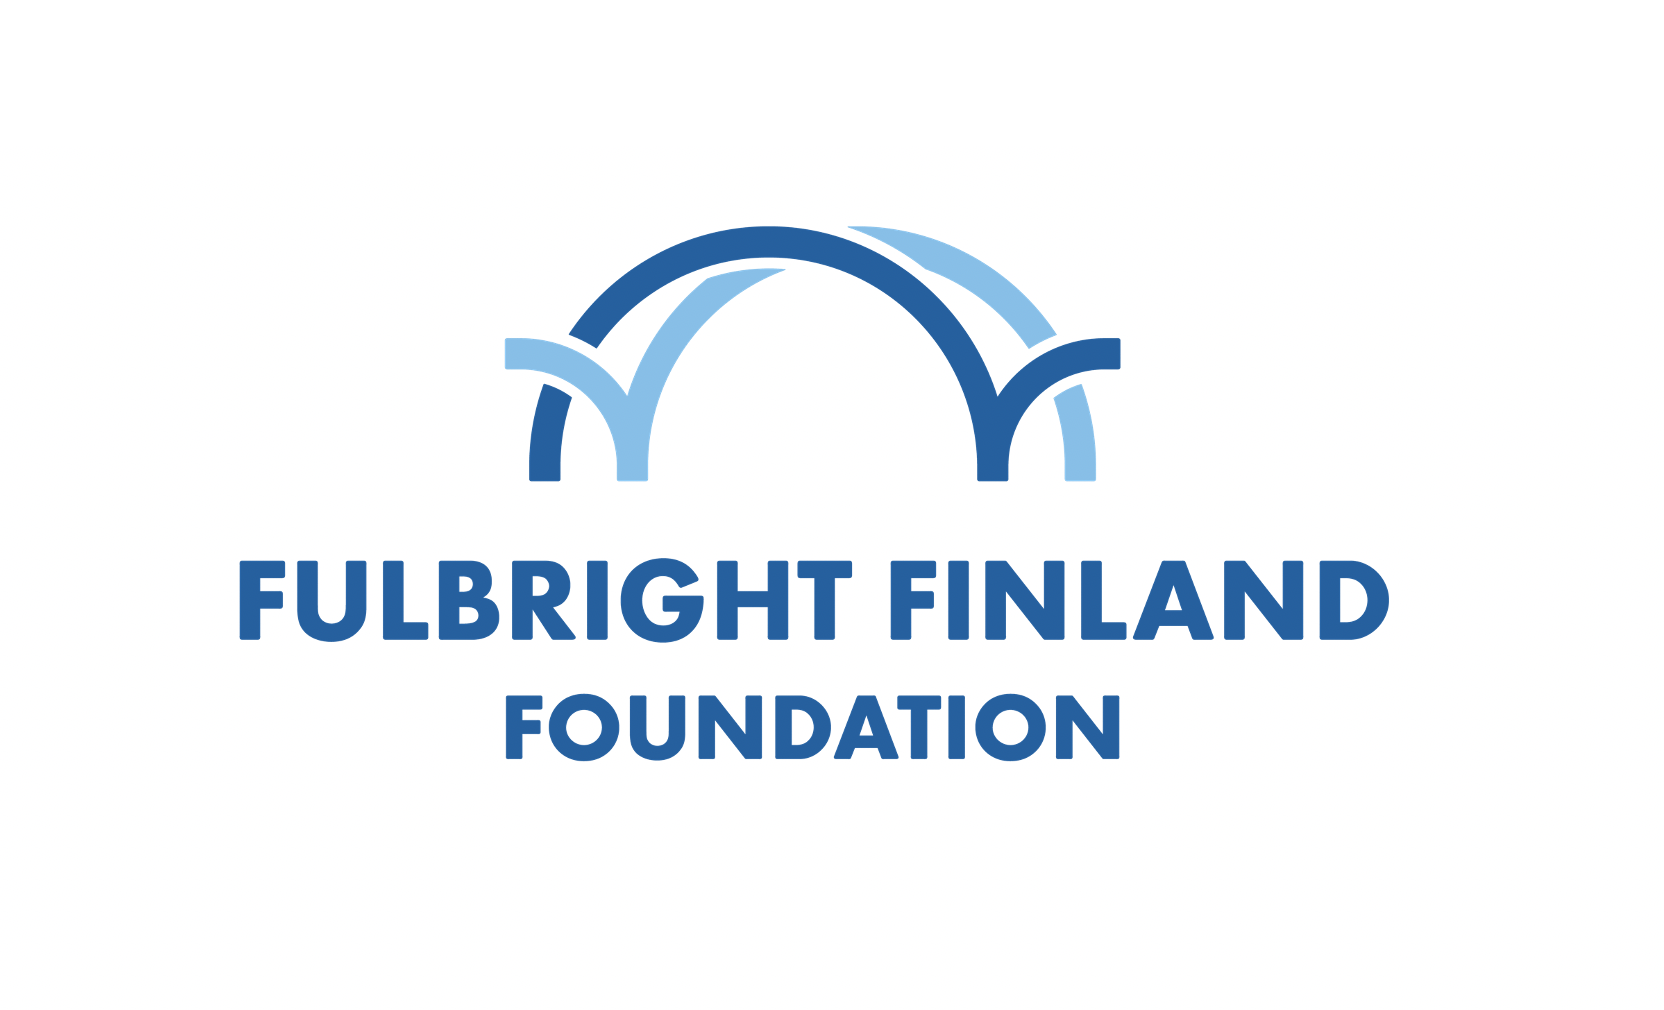 Fulbright Finland Foundation